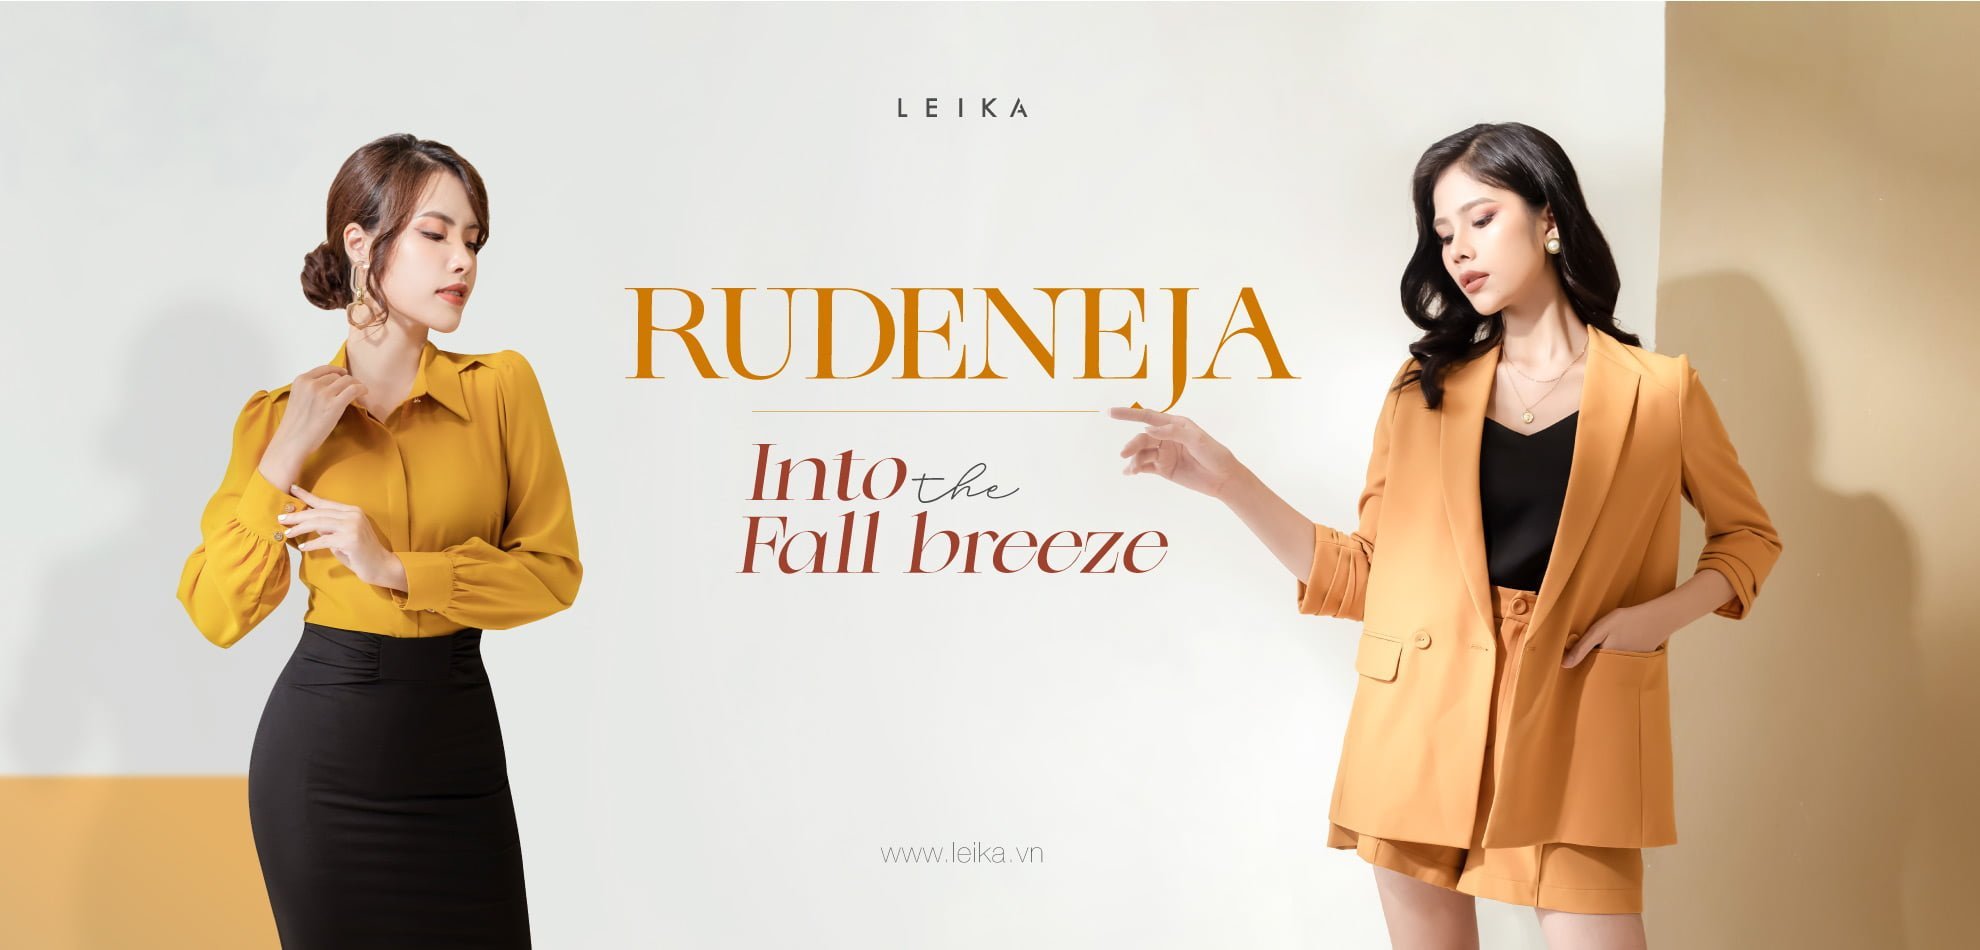 Redeneja - Into the fall breeze